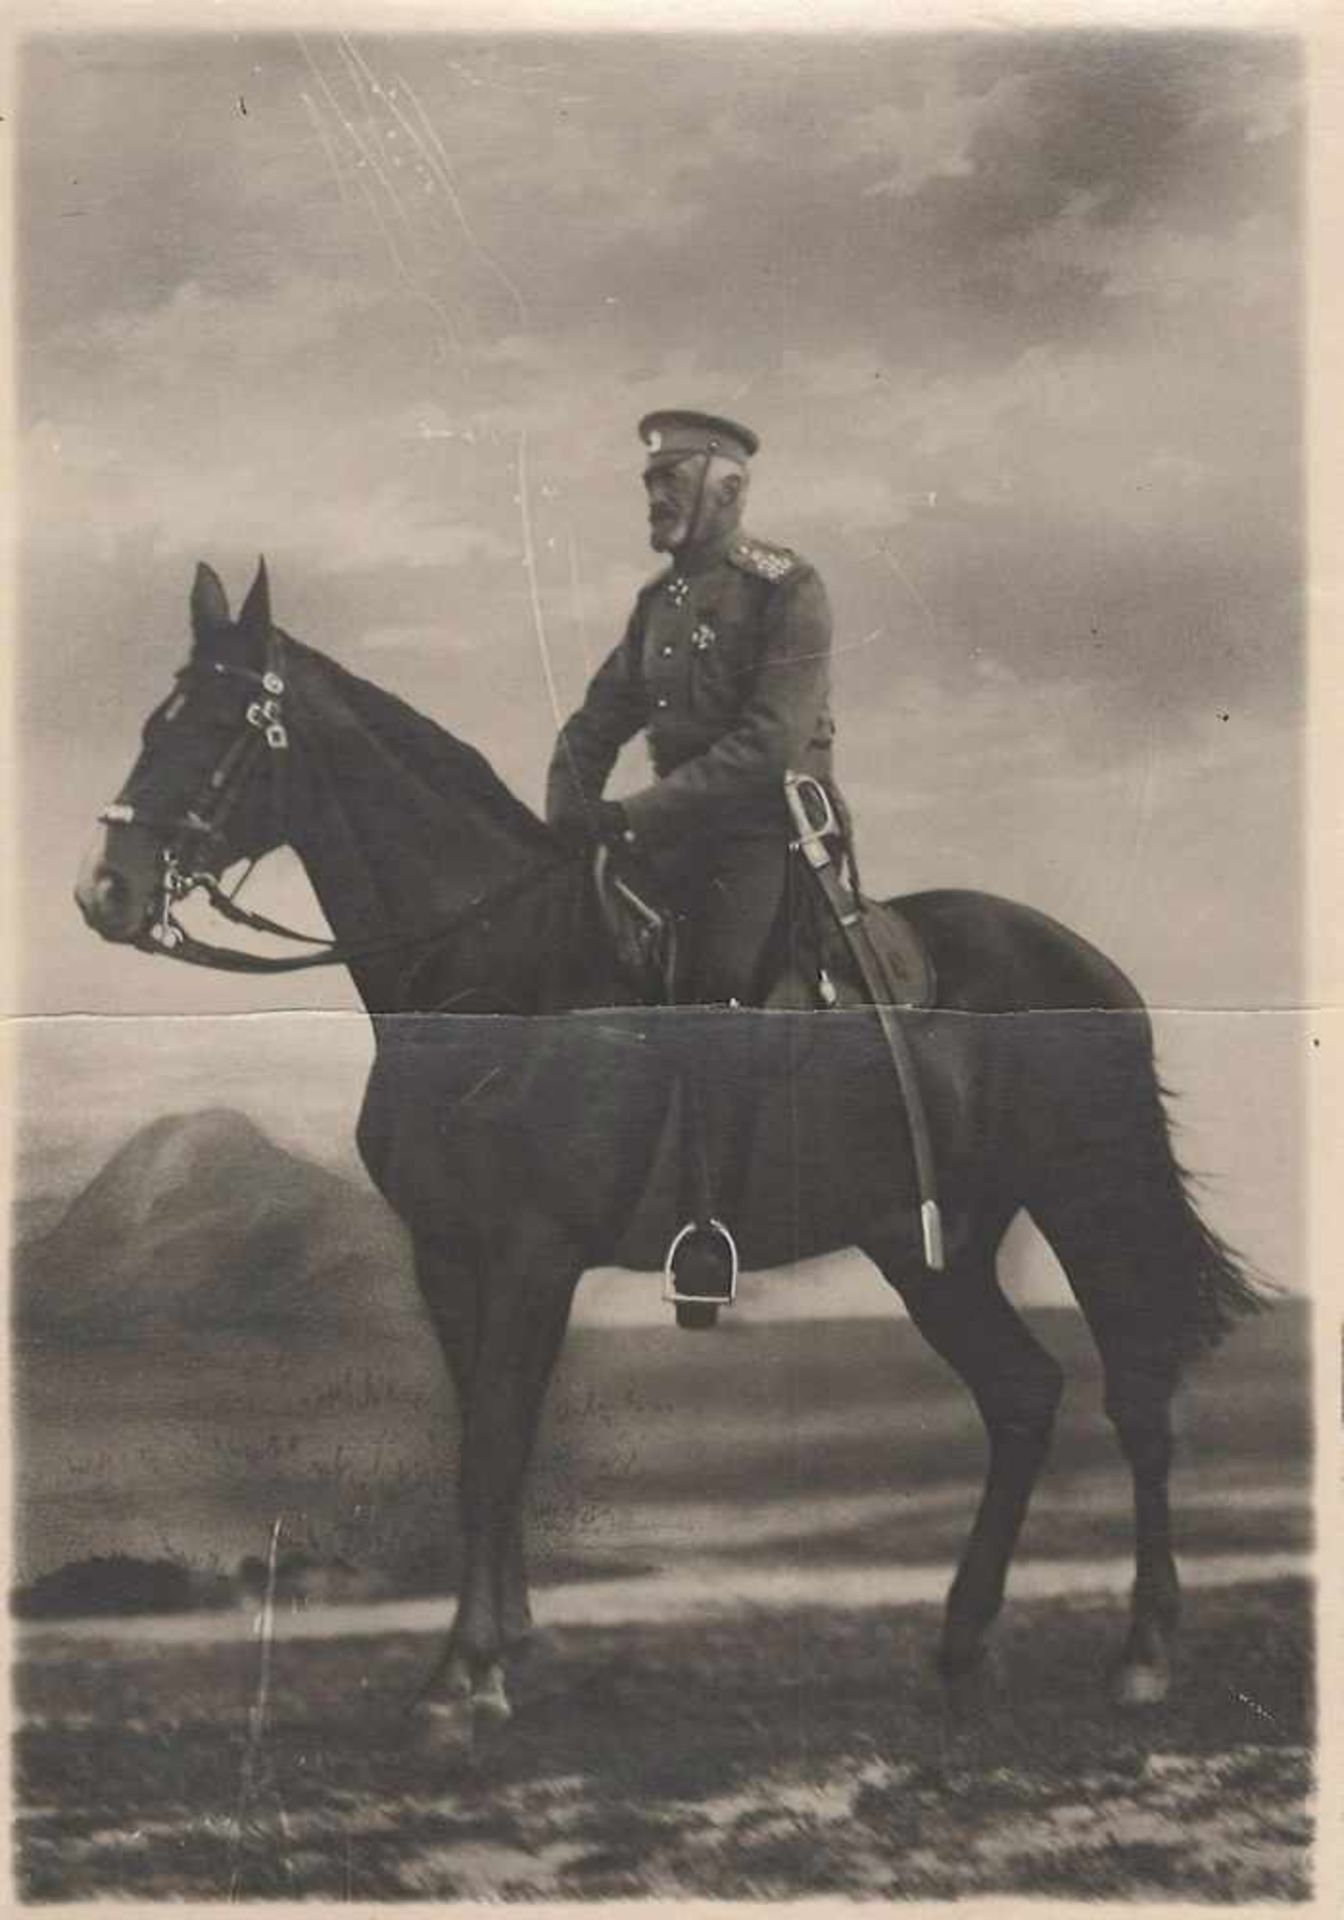 Russian mperial army. Grand Duke Nicholas Nikolaevich on the horseback. 1914-1915. Photograph.